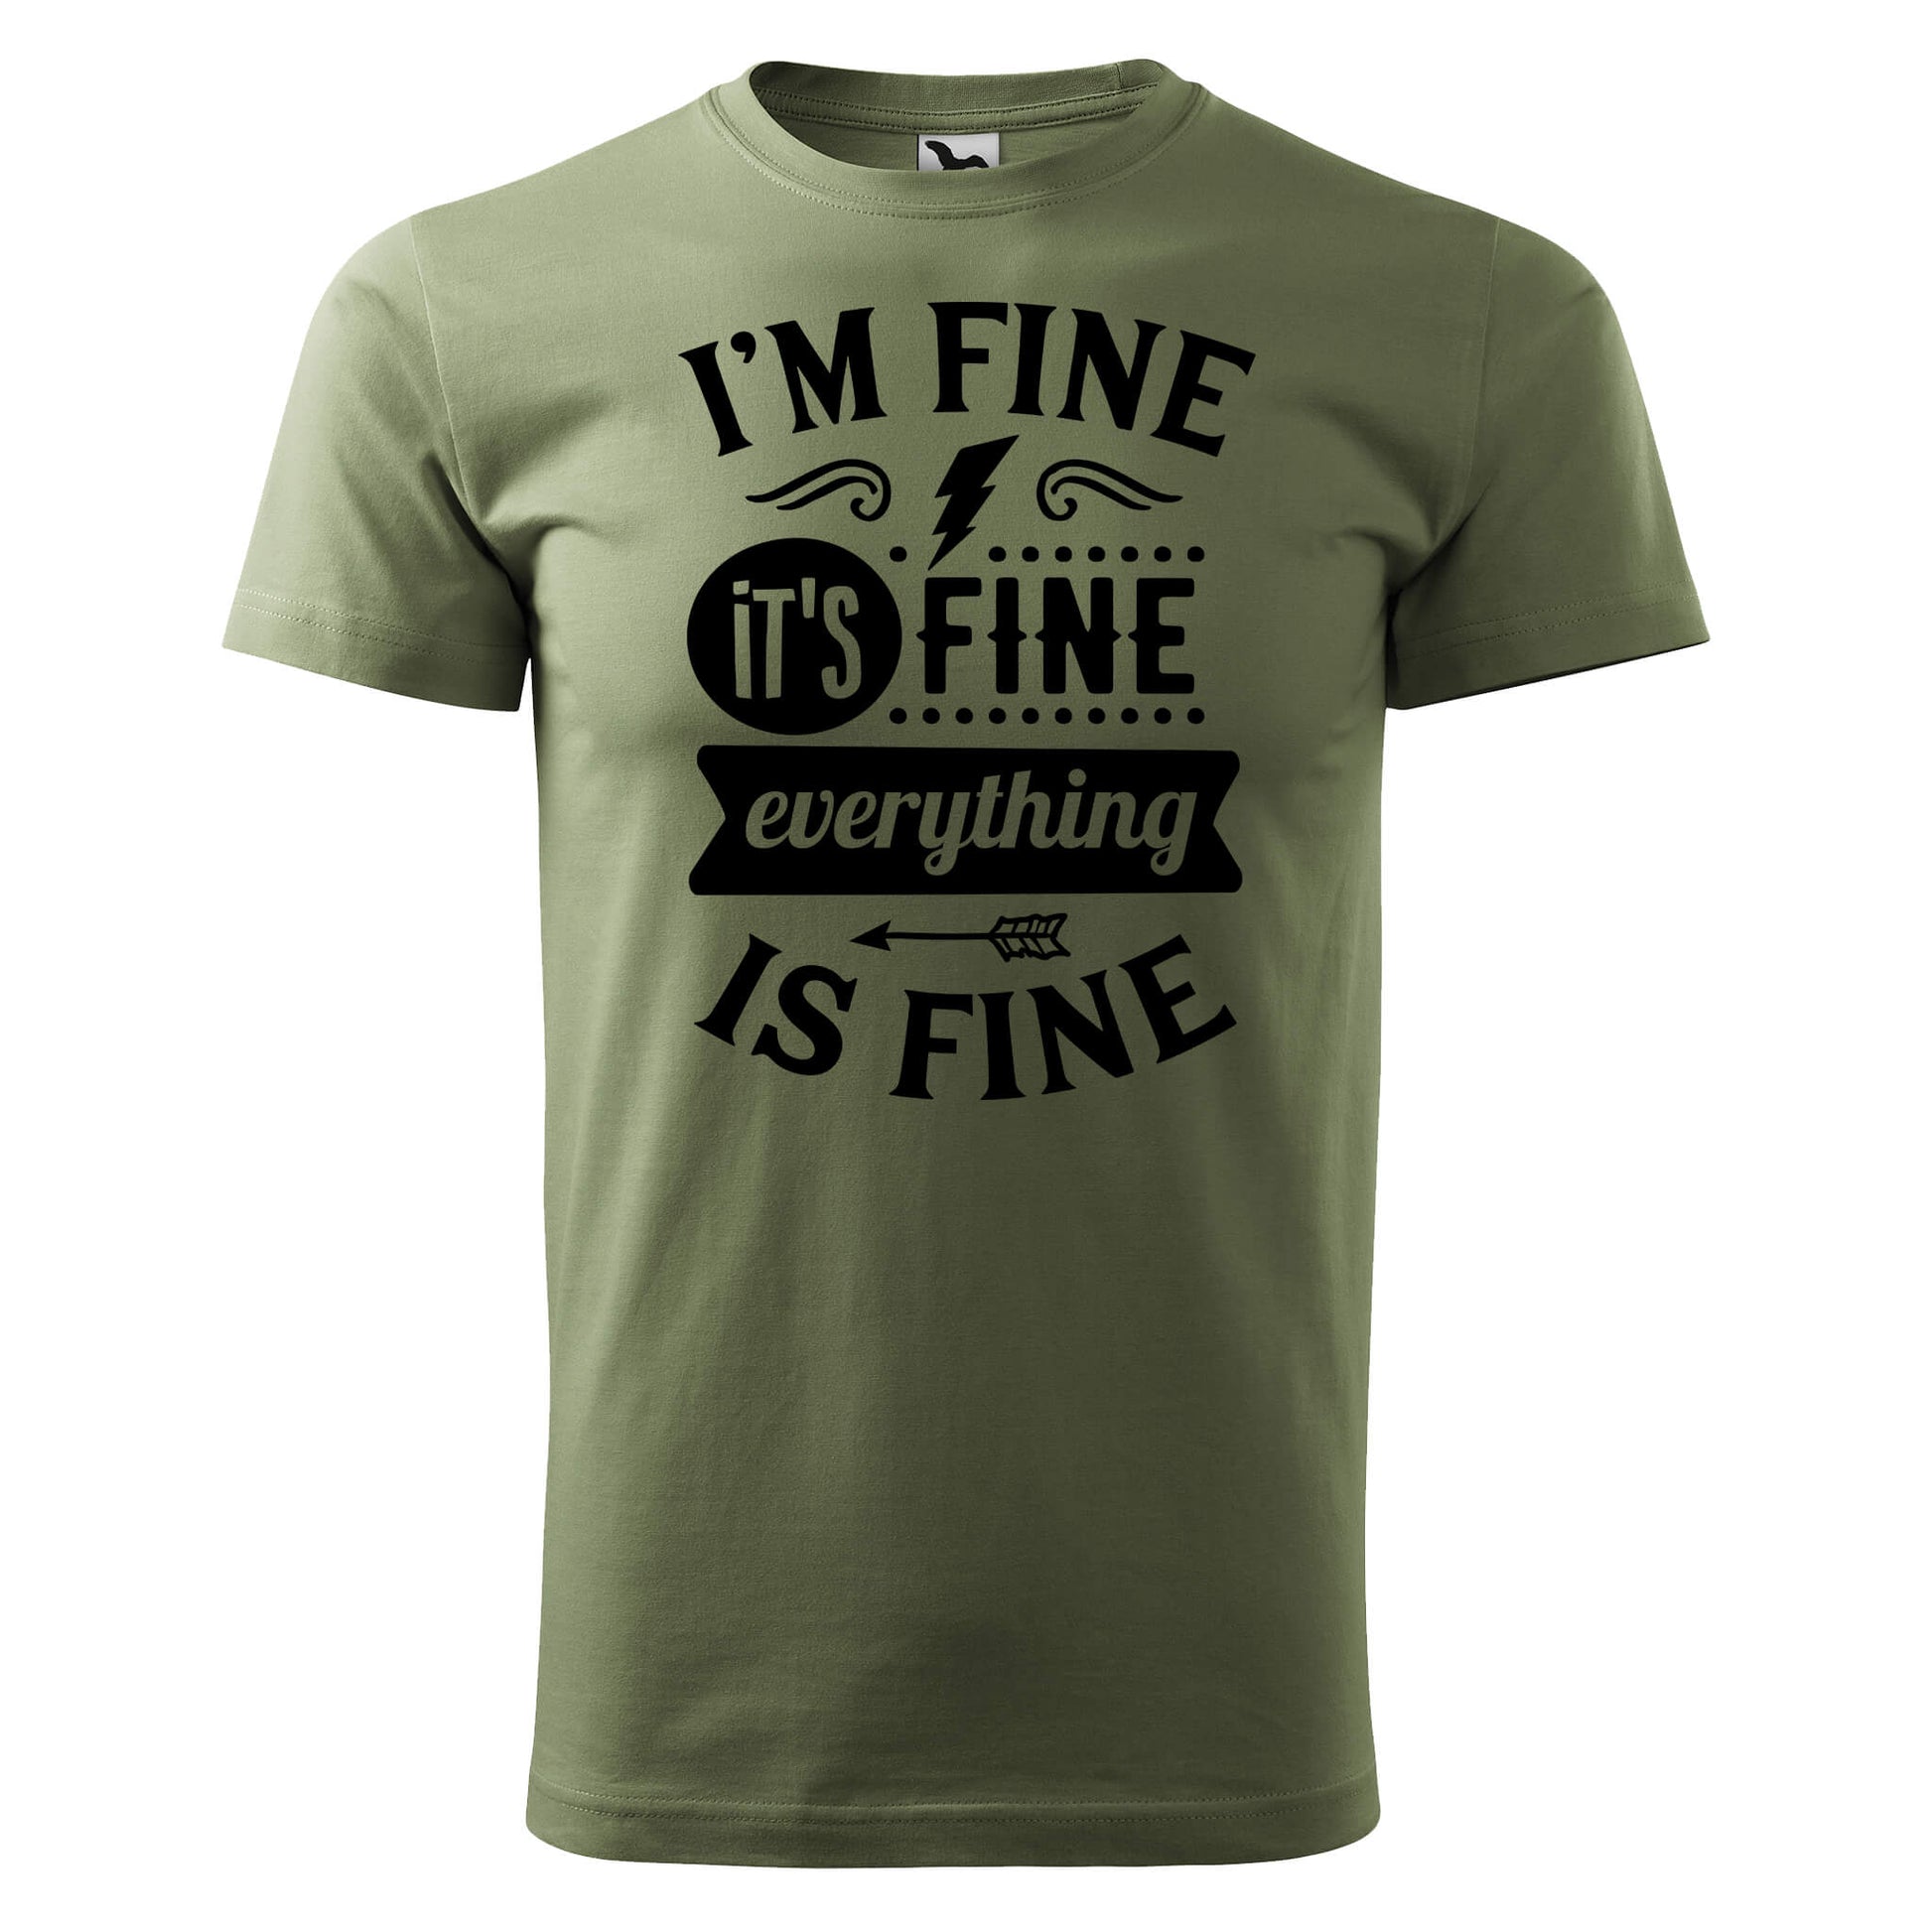 Im fine its fine t-shirt - rvdesignprint